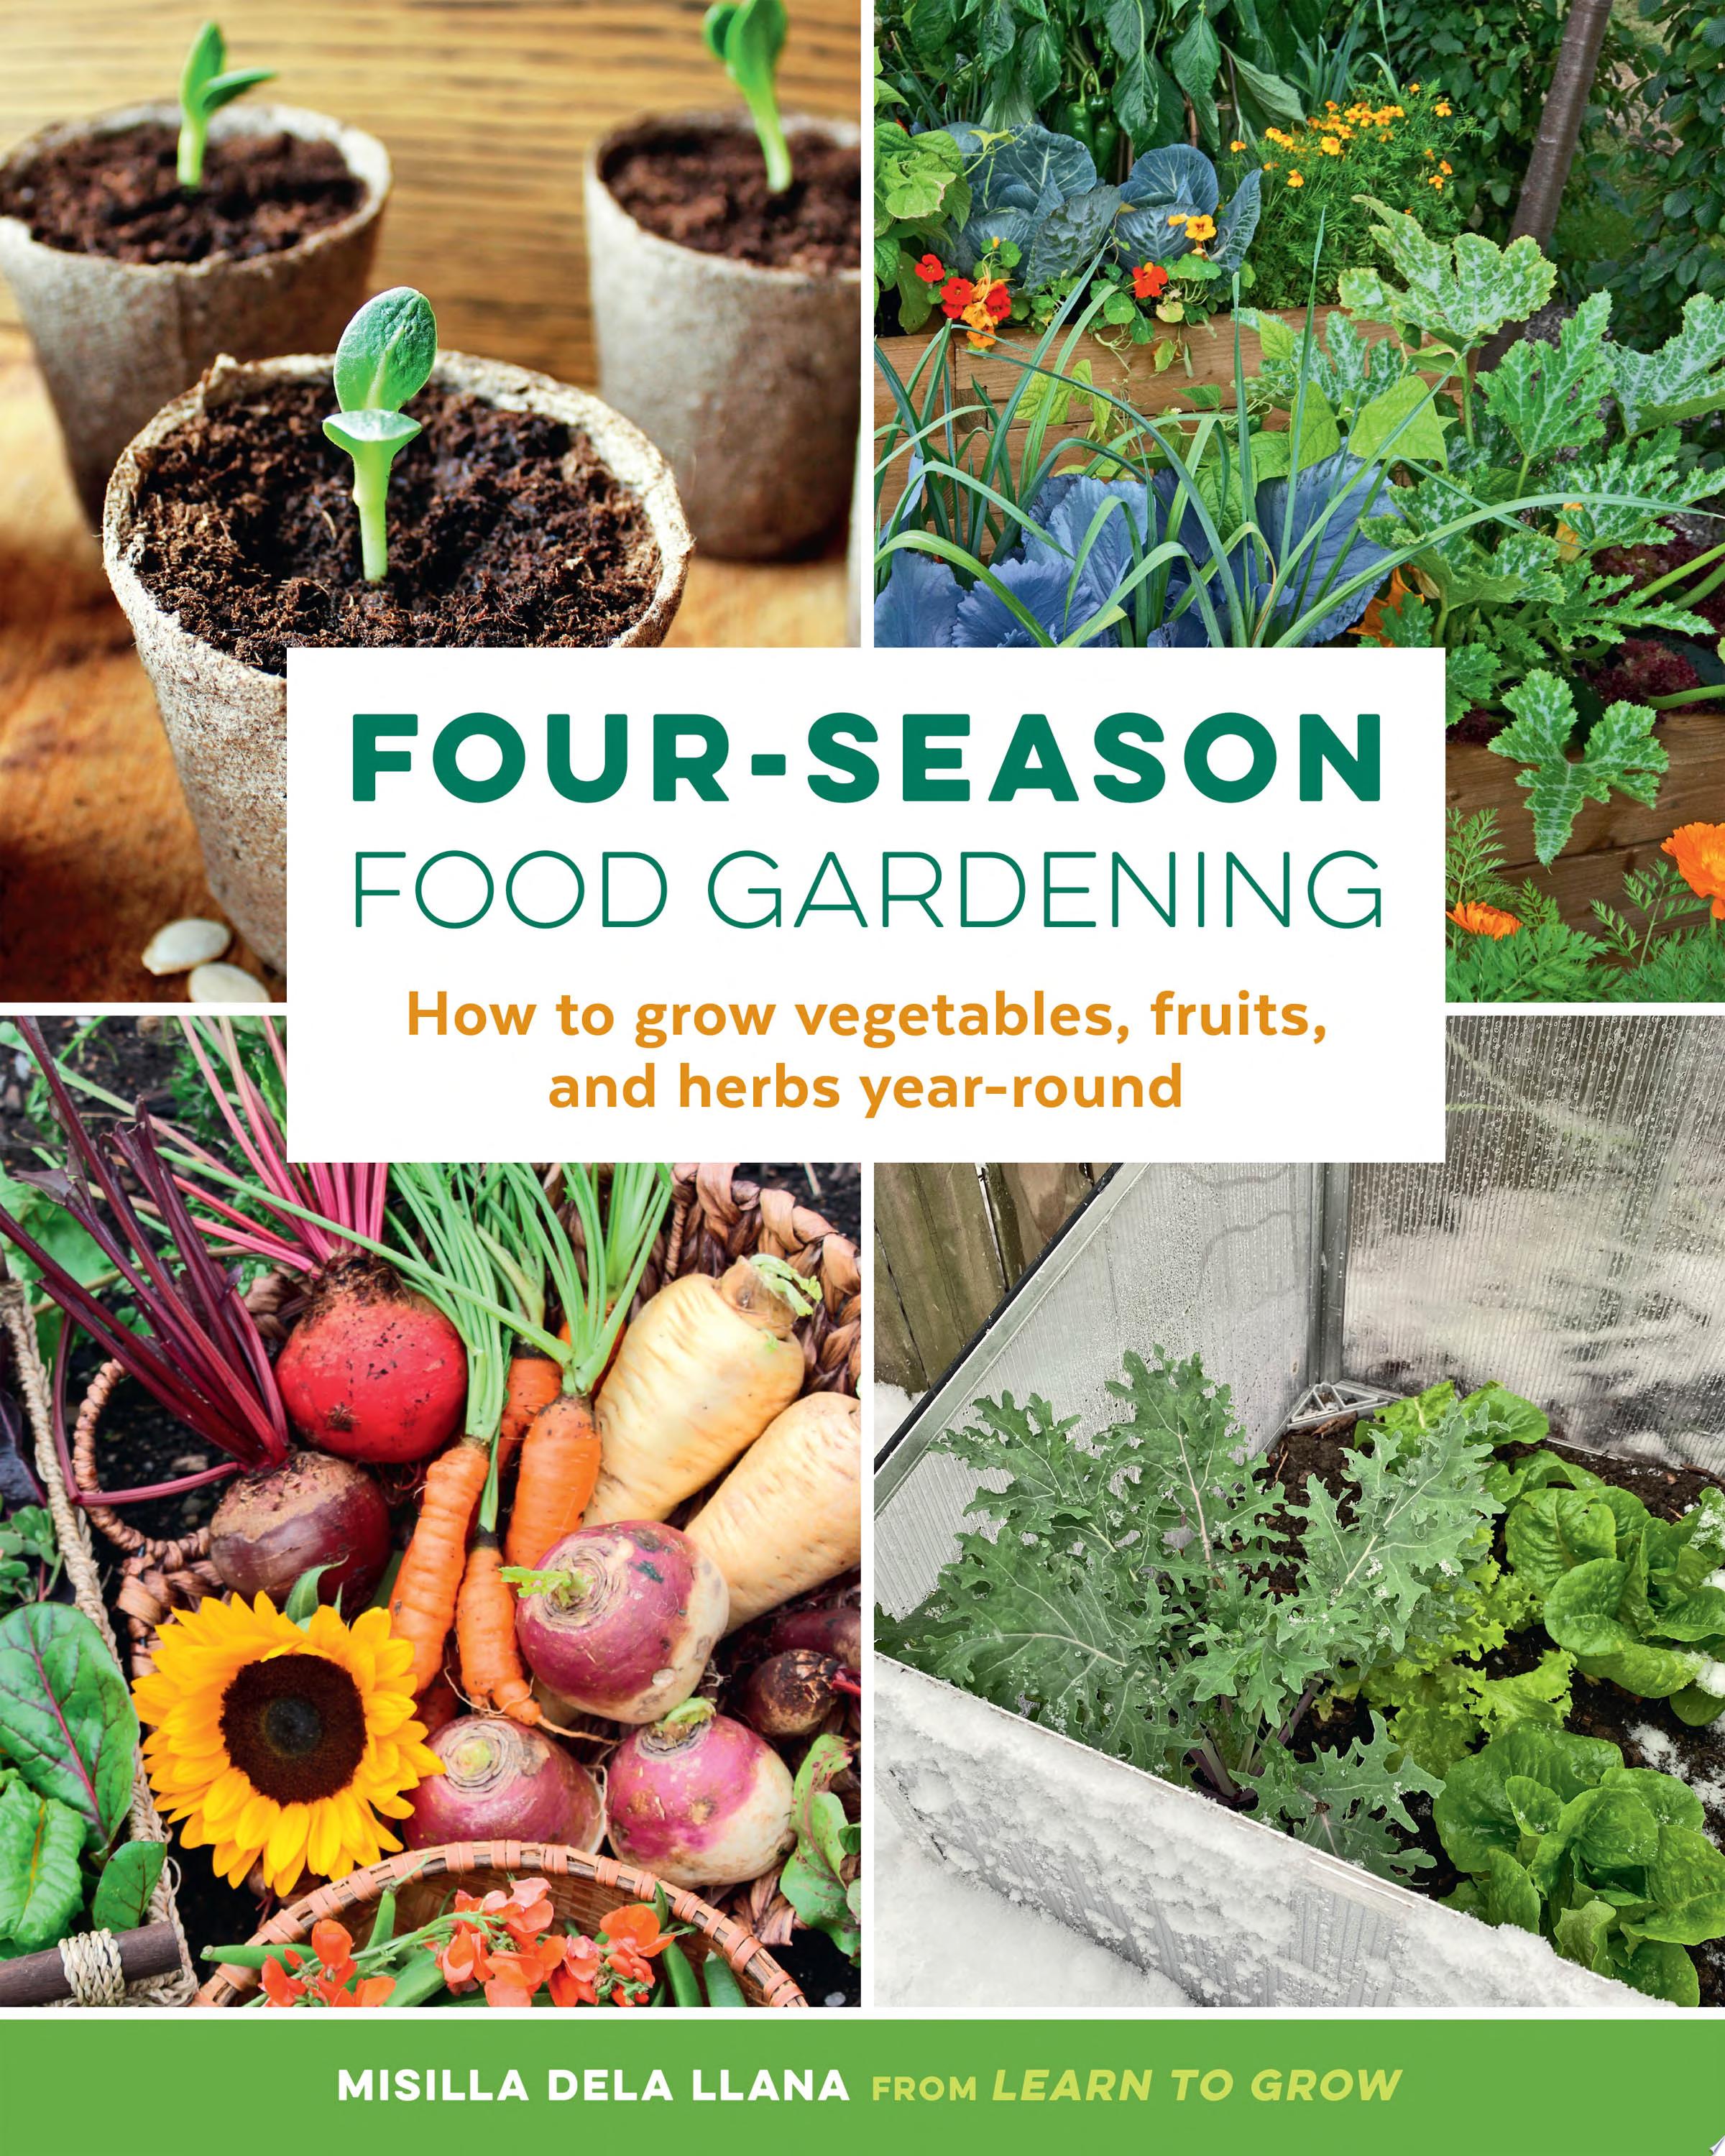 Image for "Four-Season Food Gardening"